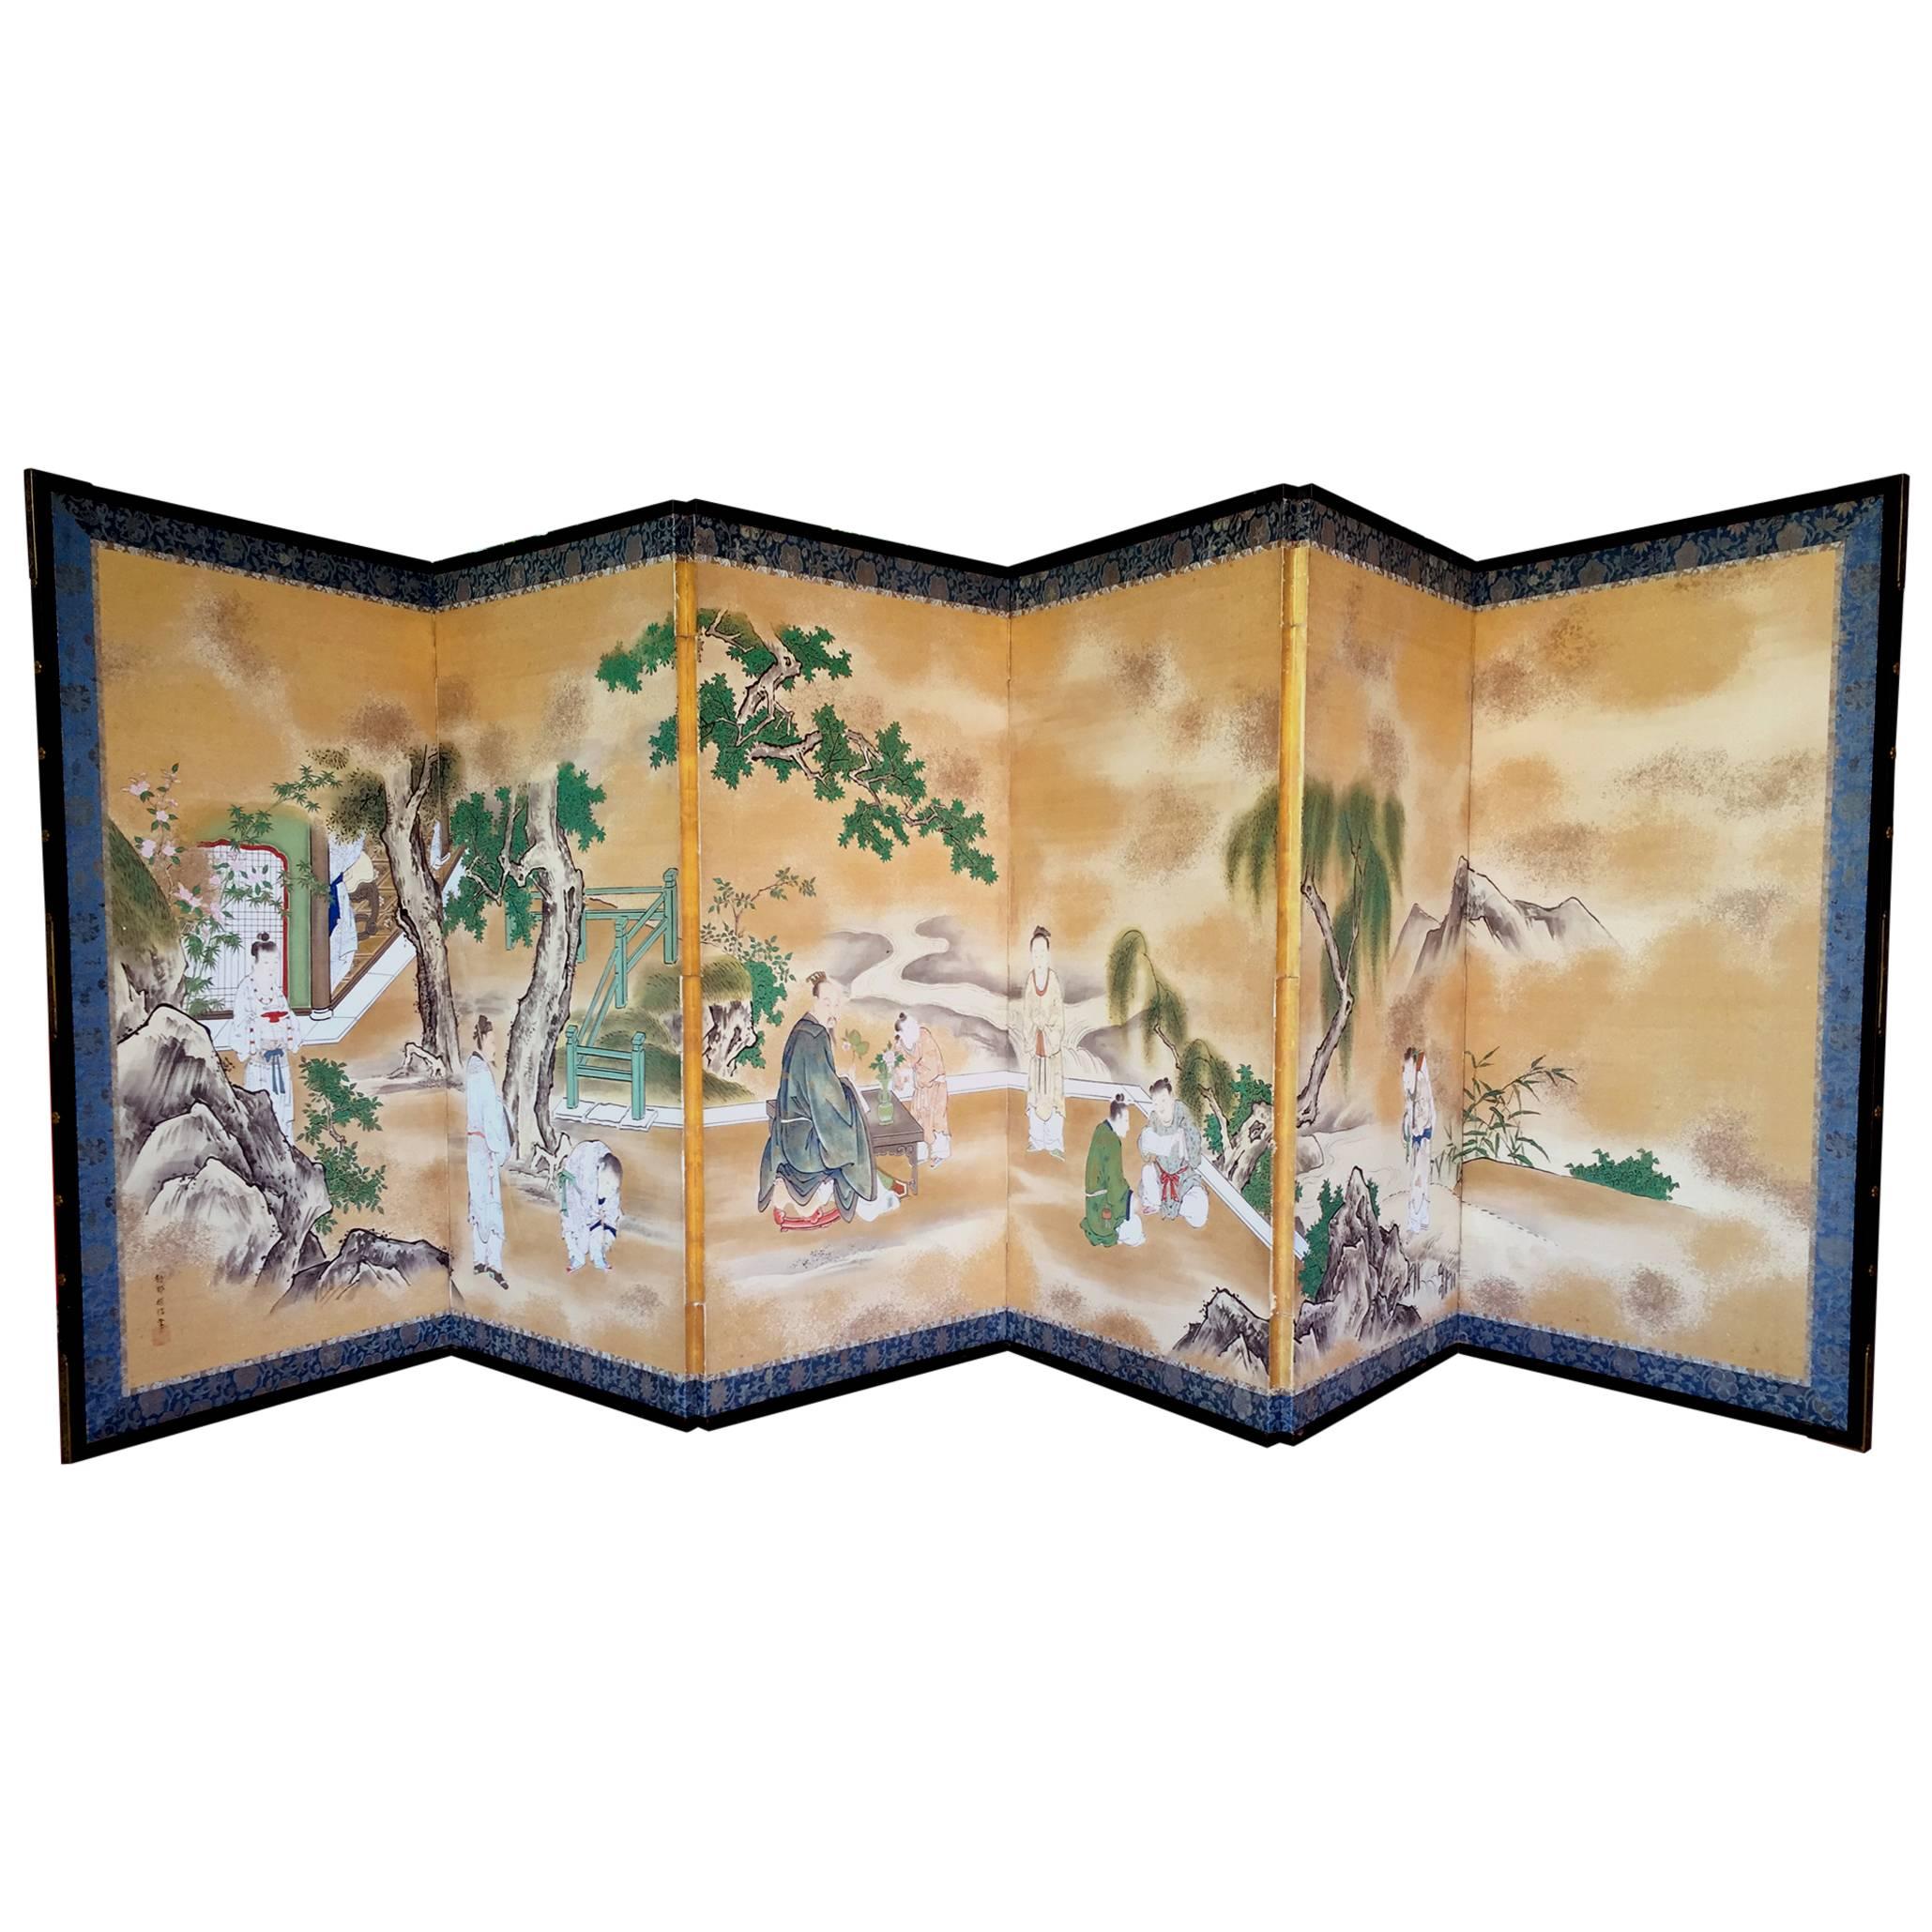 Rare Antique Japanese Folding Screen by Kano Tanshin